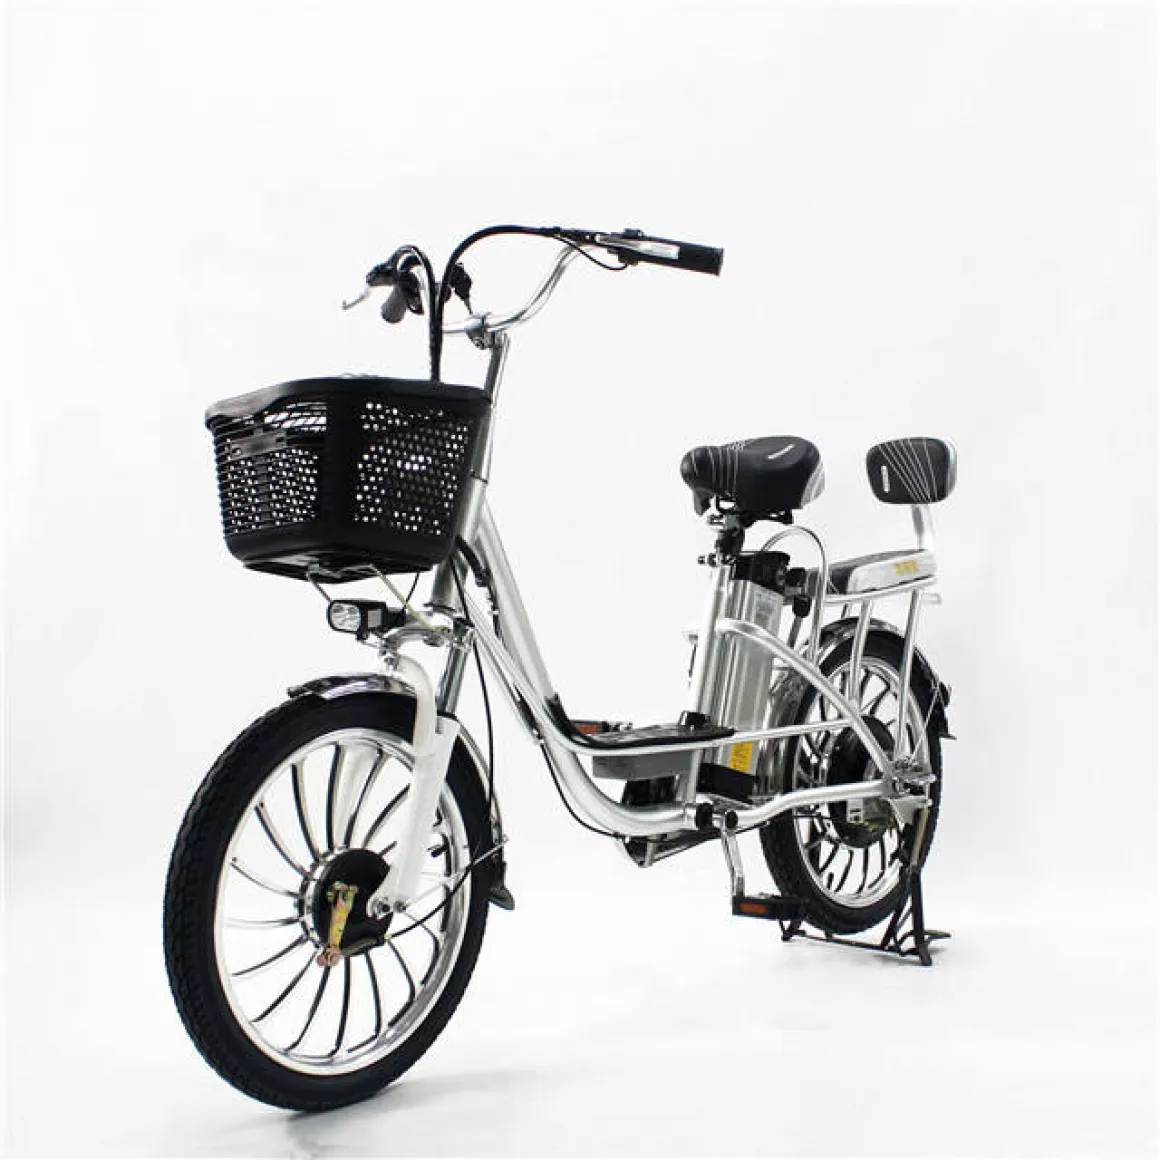 Электровелосипед delivery v-11. Delivery v2 электровелосипед. Электровелосипед QUANBAO. EKX x20 электровелосипед. Купить электровелосипед в кредит